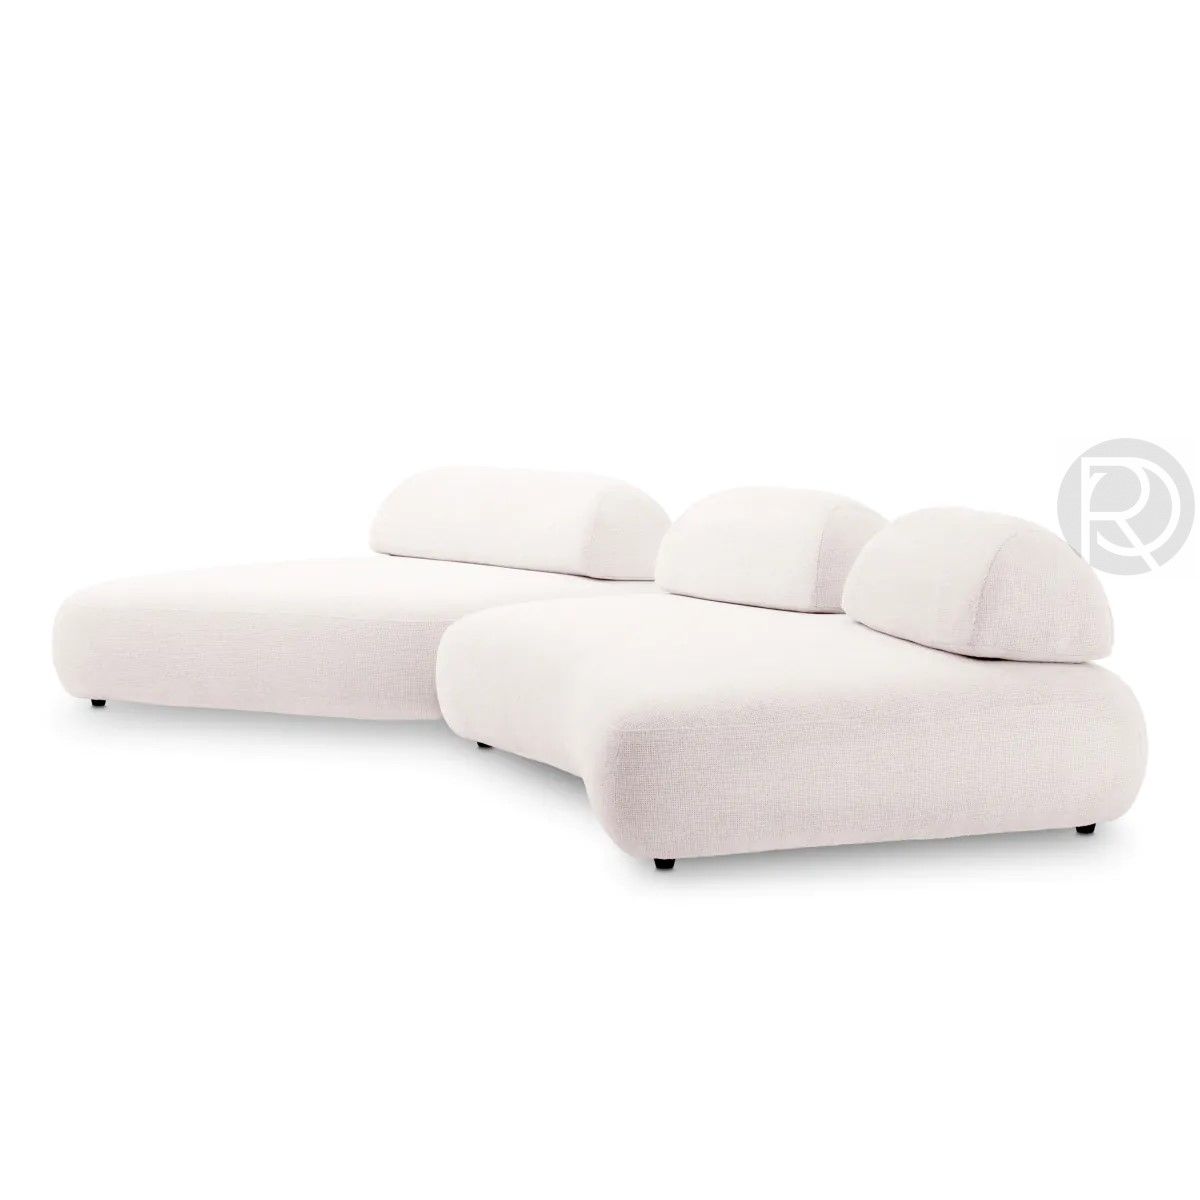 Modular sofa RESIDENZA by EICHHOLTZ